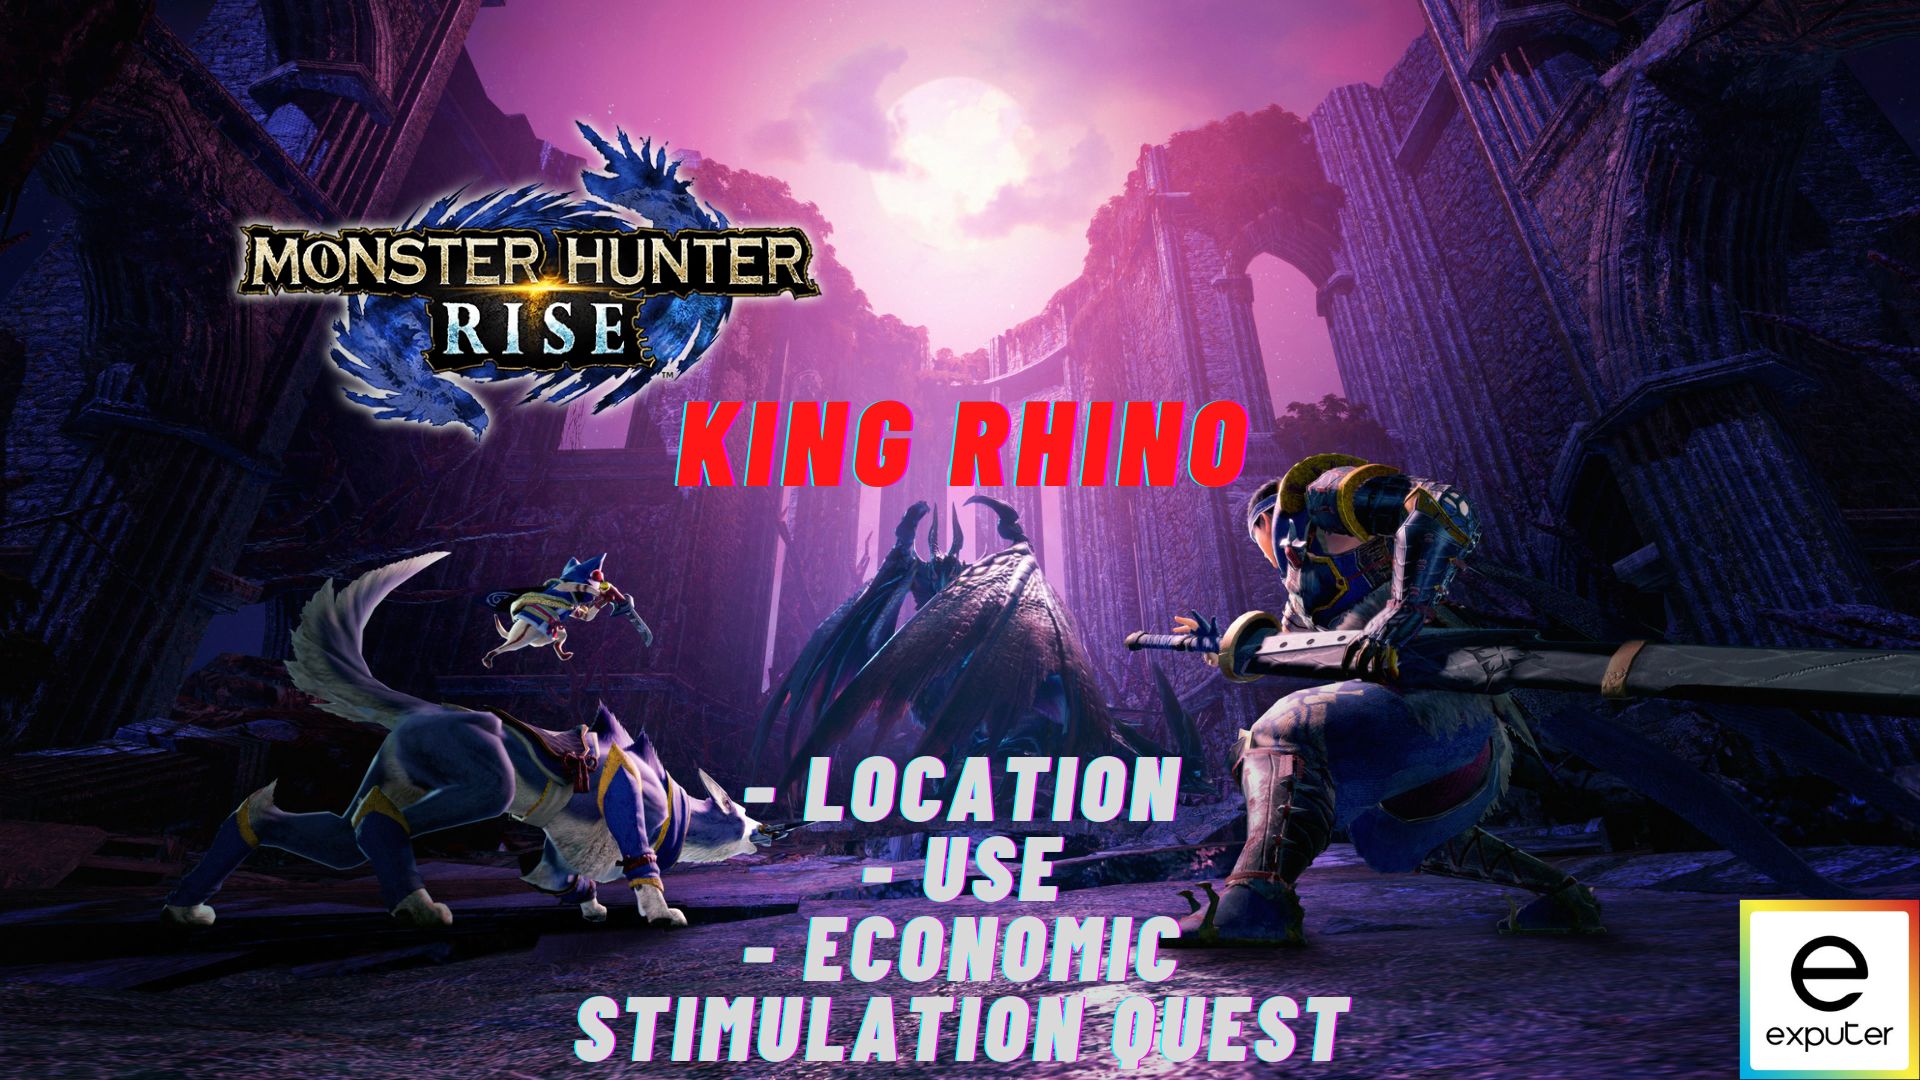 King Rhino in Monster Hunter Rise